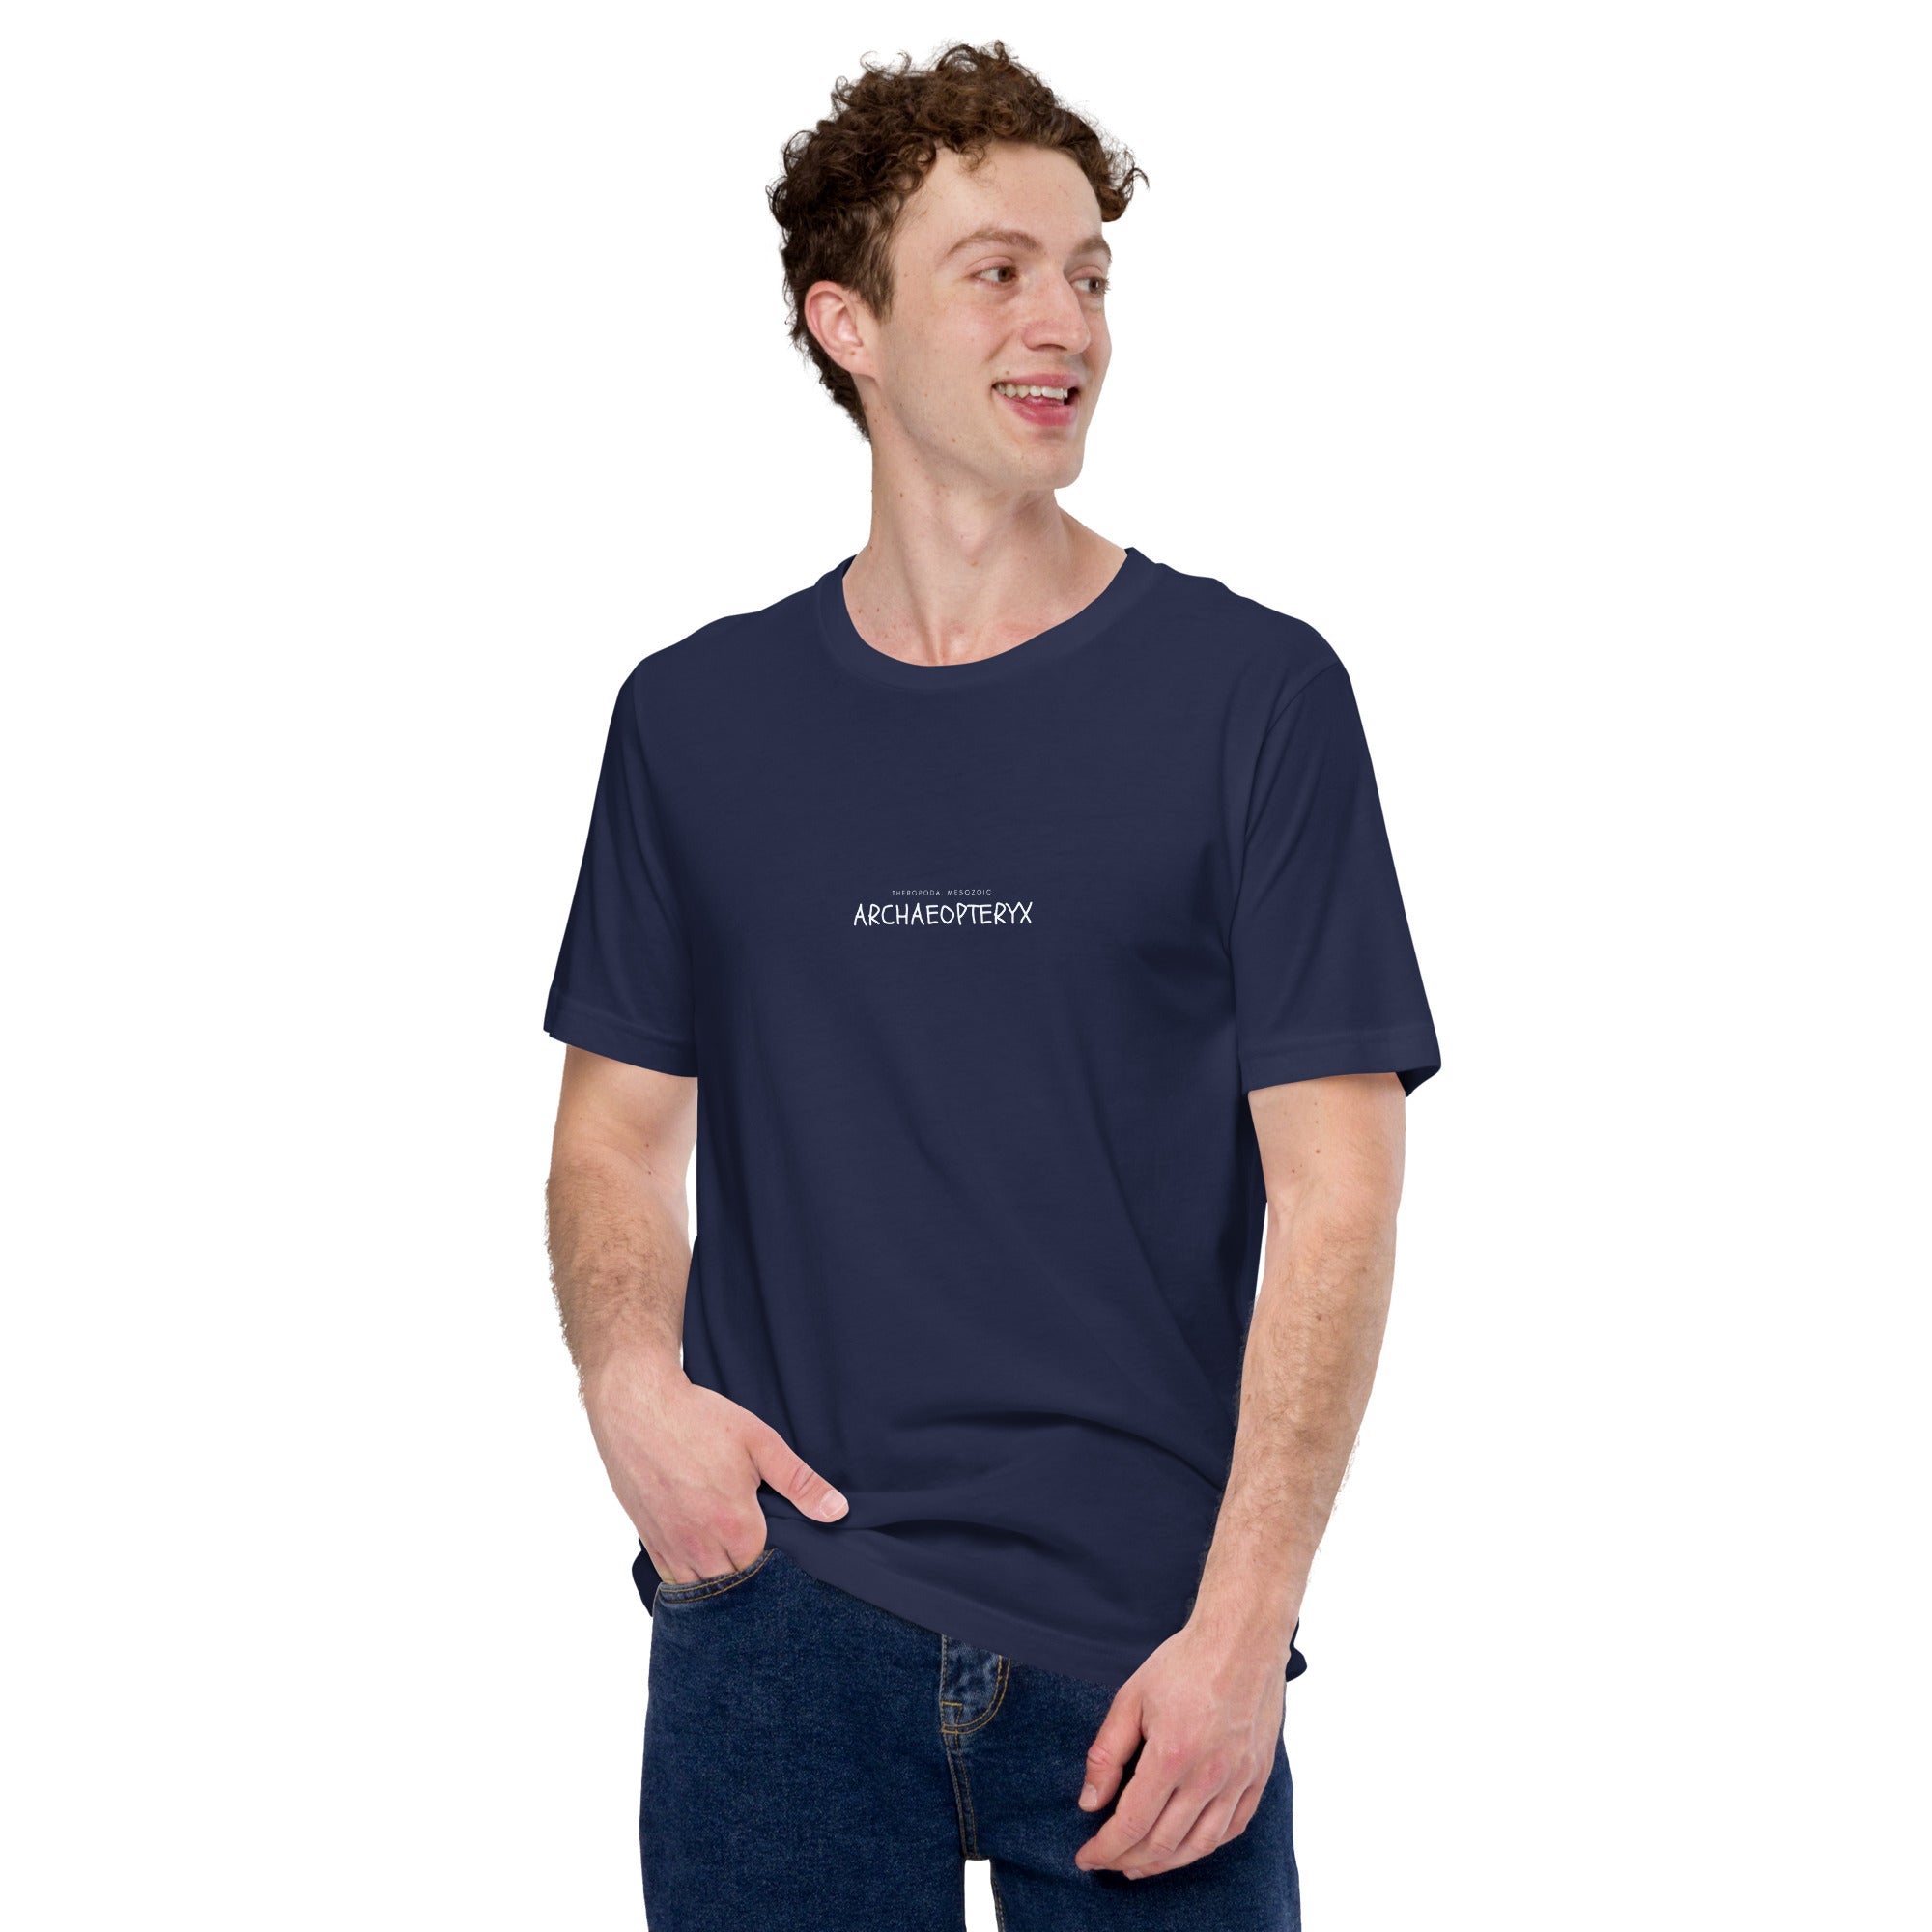 Camiseta unisex con texto "Archaeopteryx"